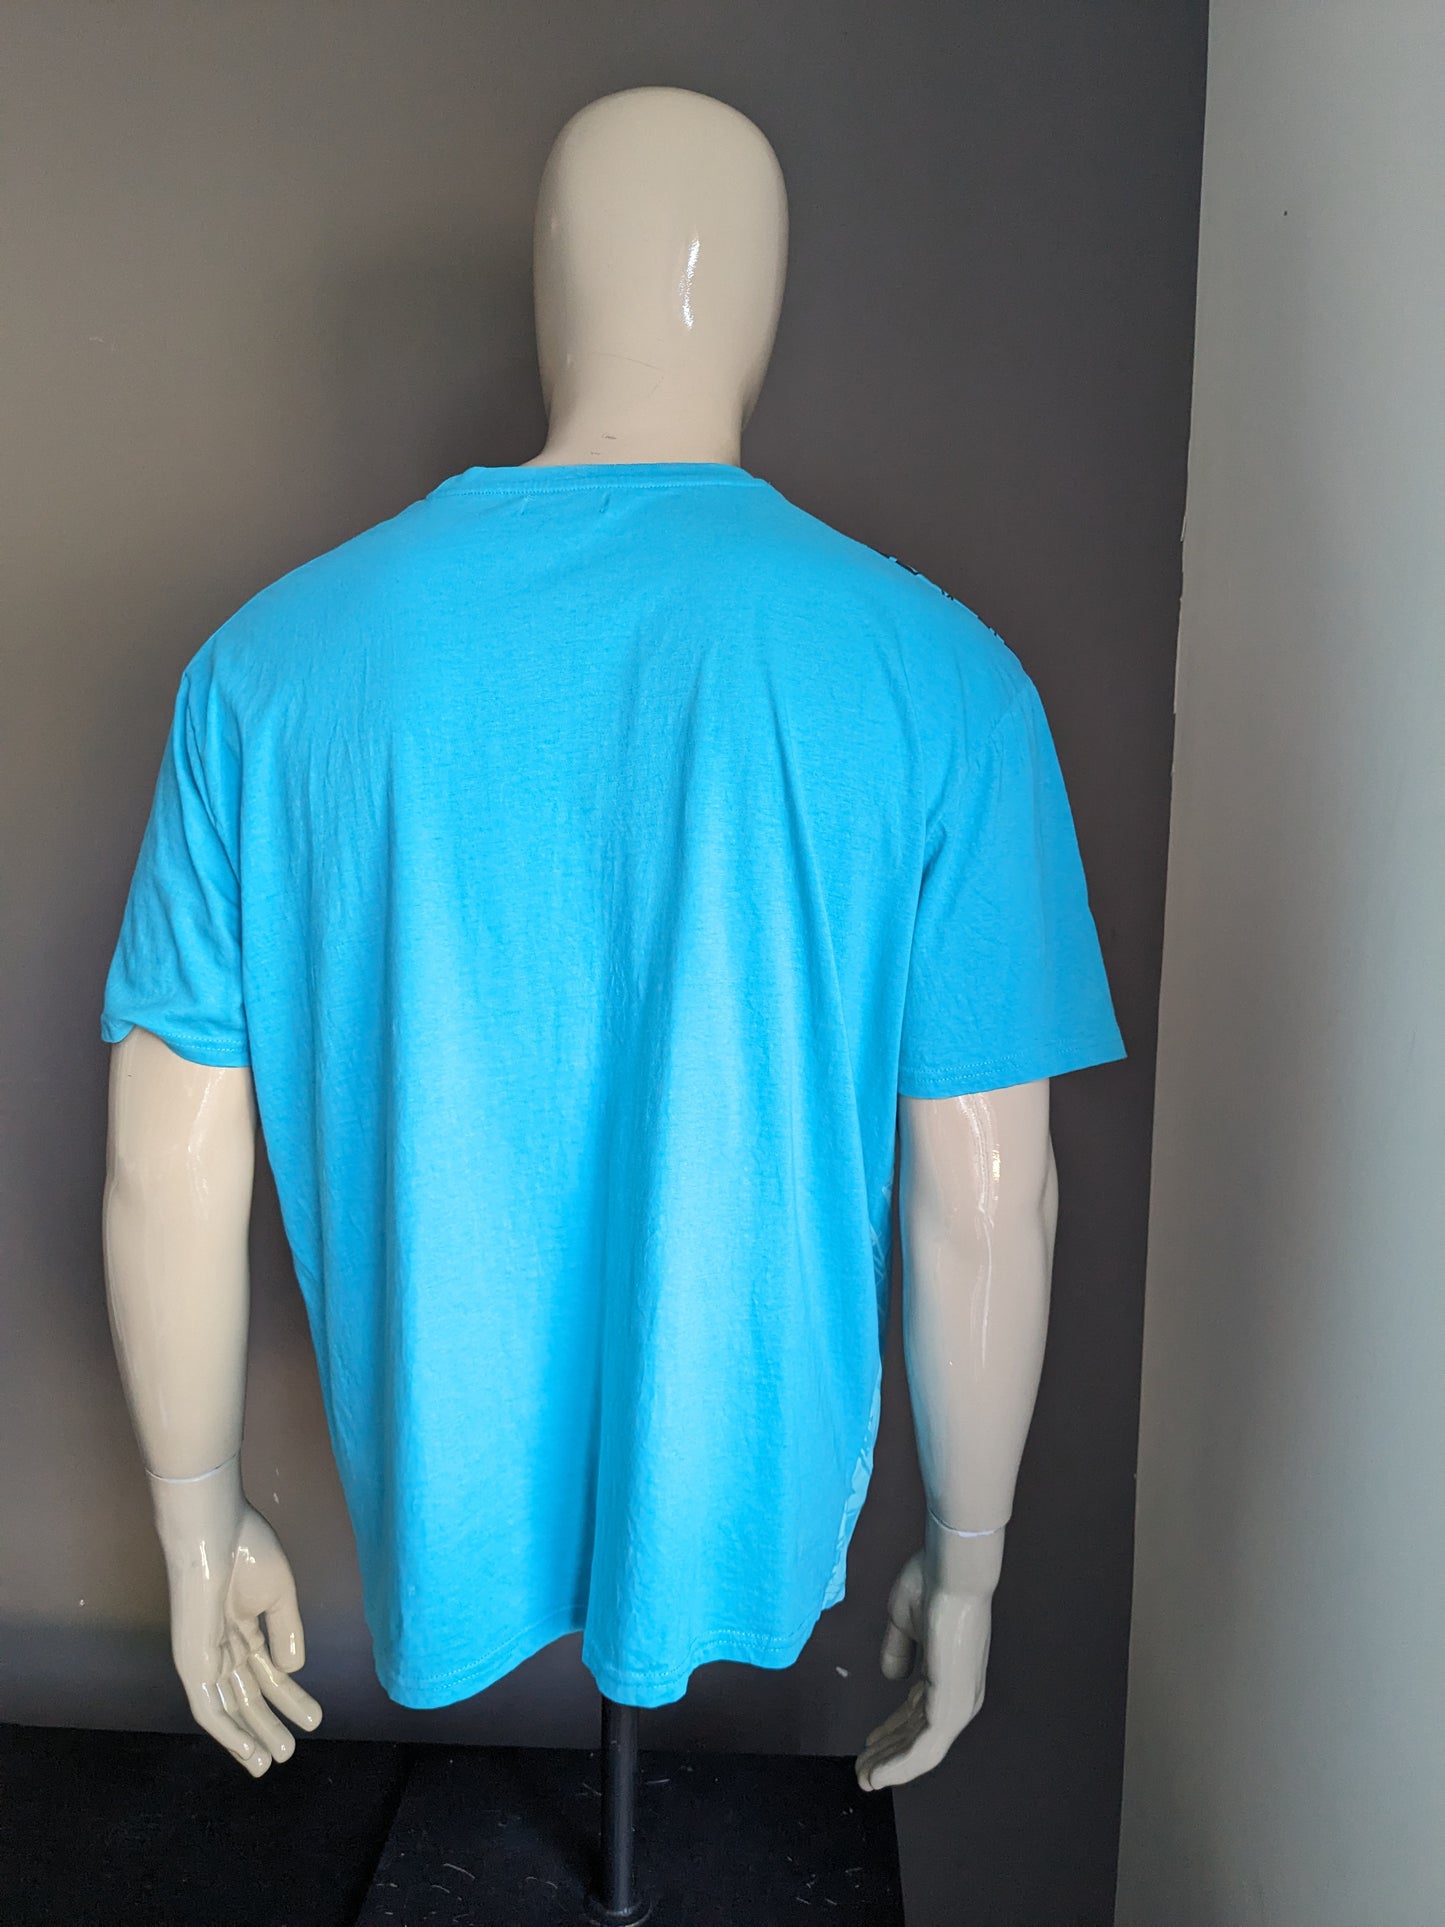 Atlas para la camisa de hombres. Azul con impresión. Tamaño 3xl / xxxl.